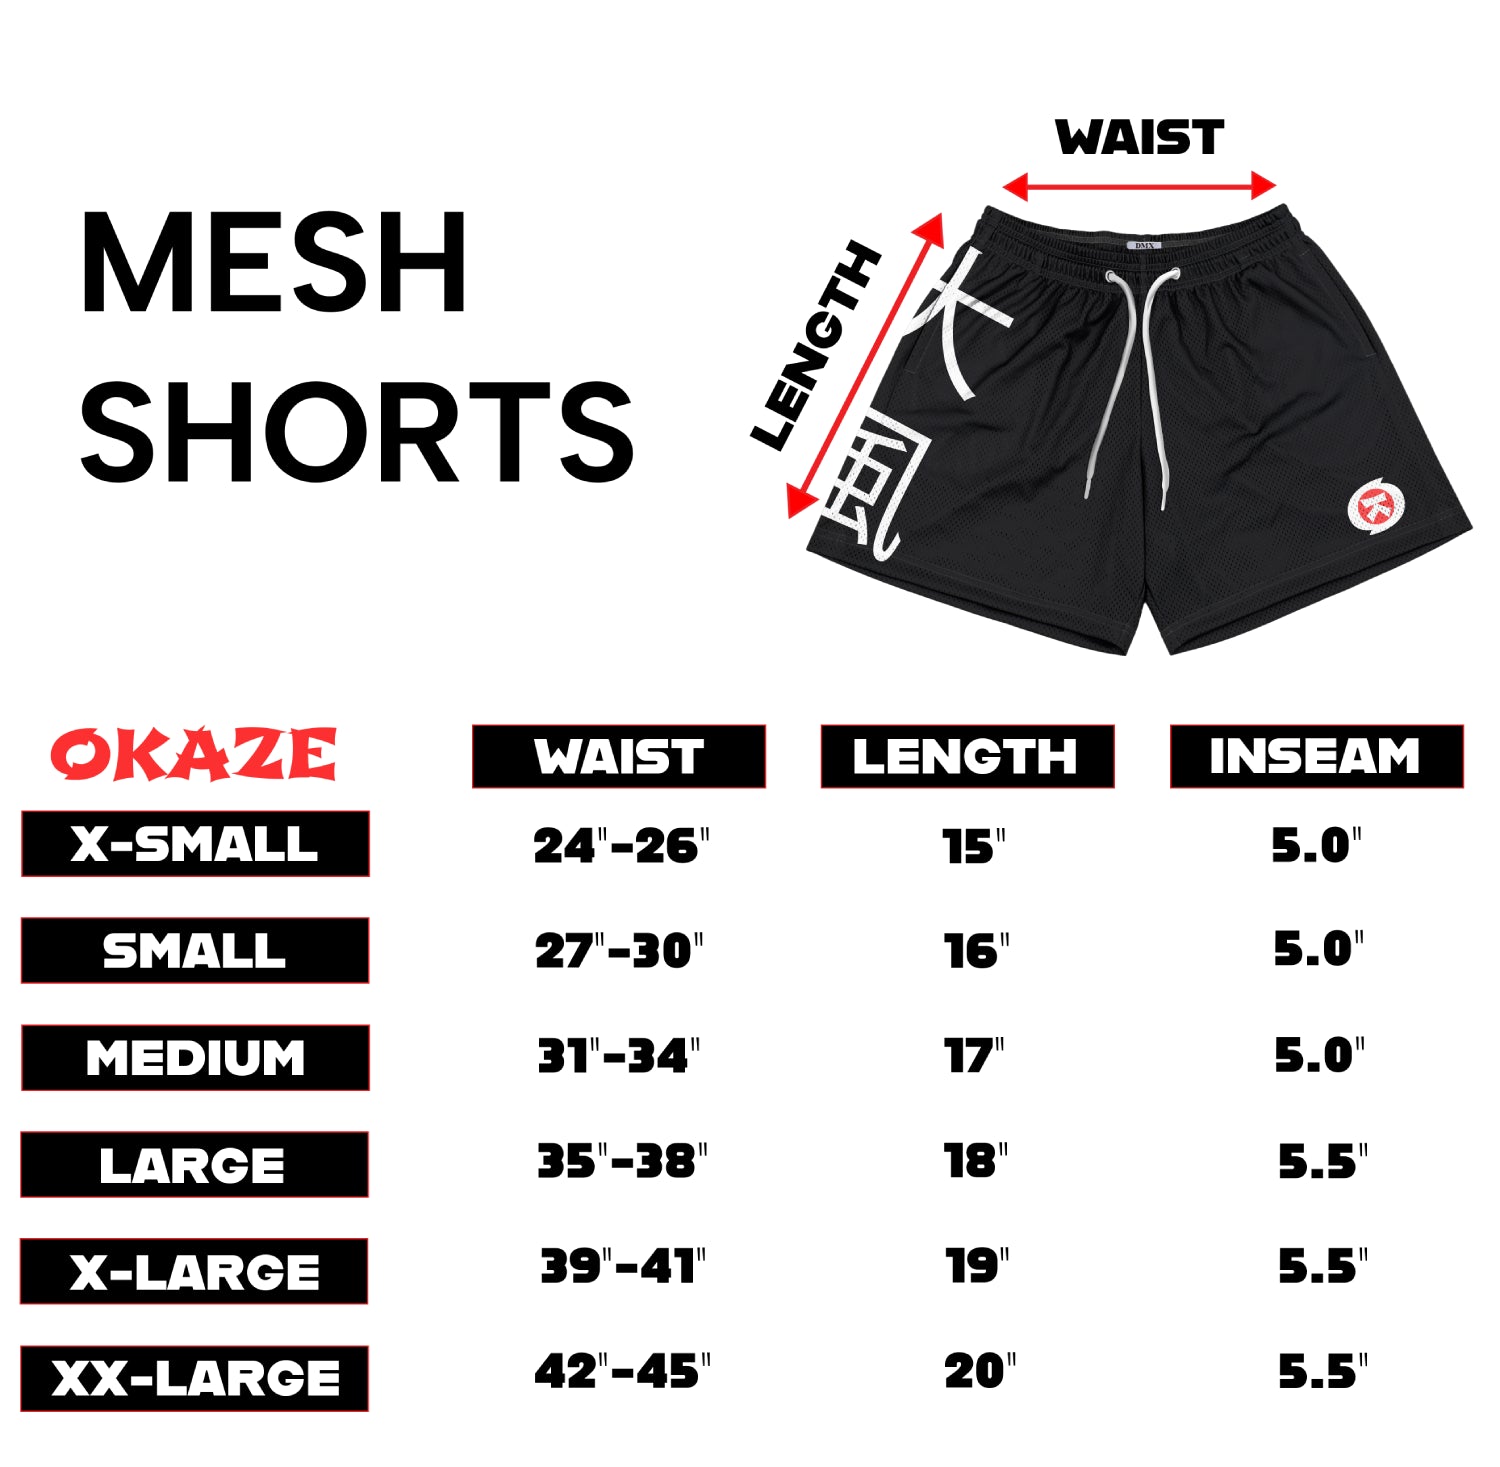 okaze mesh shorts size chart